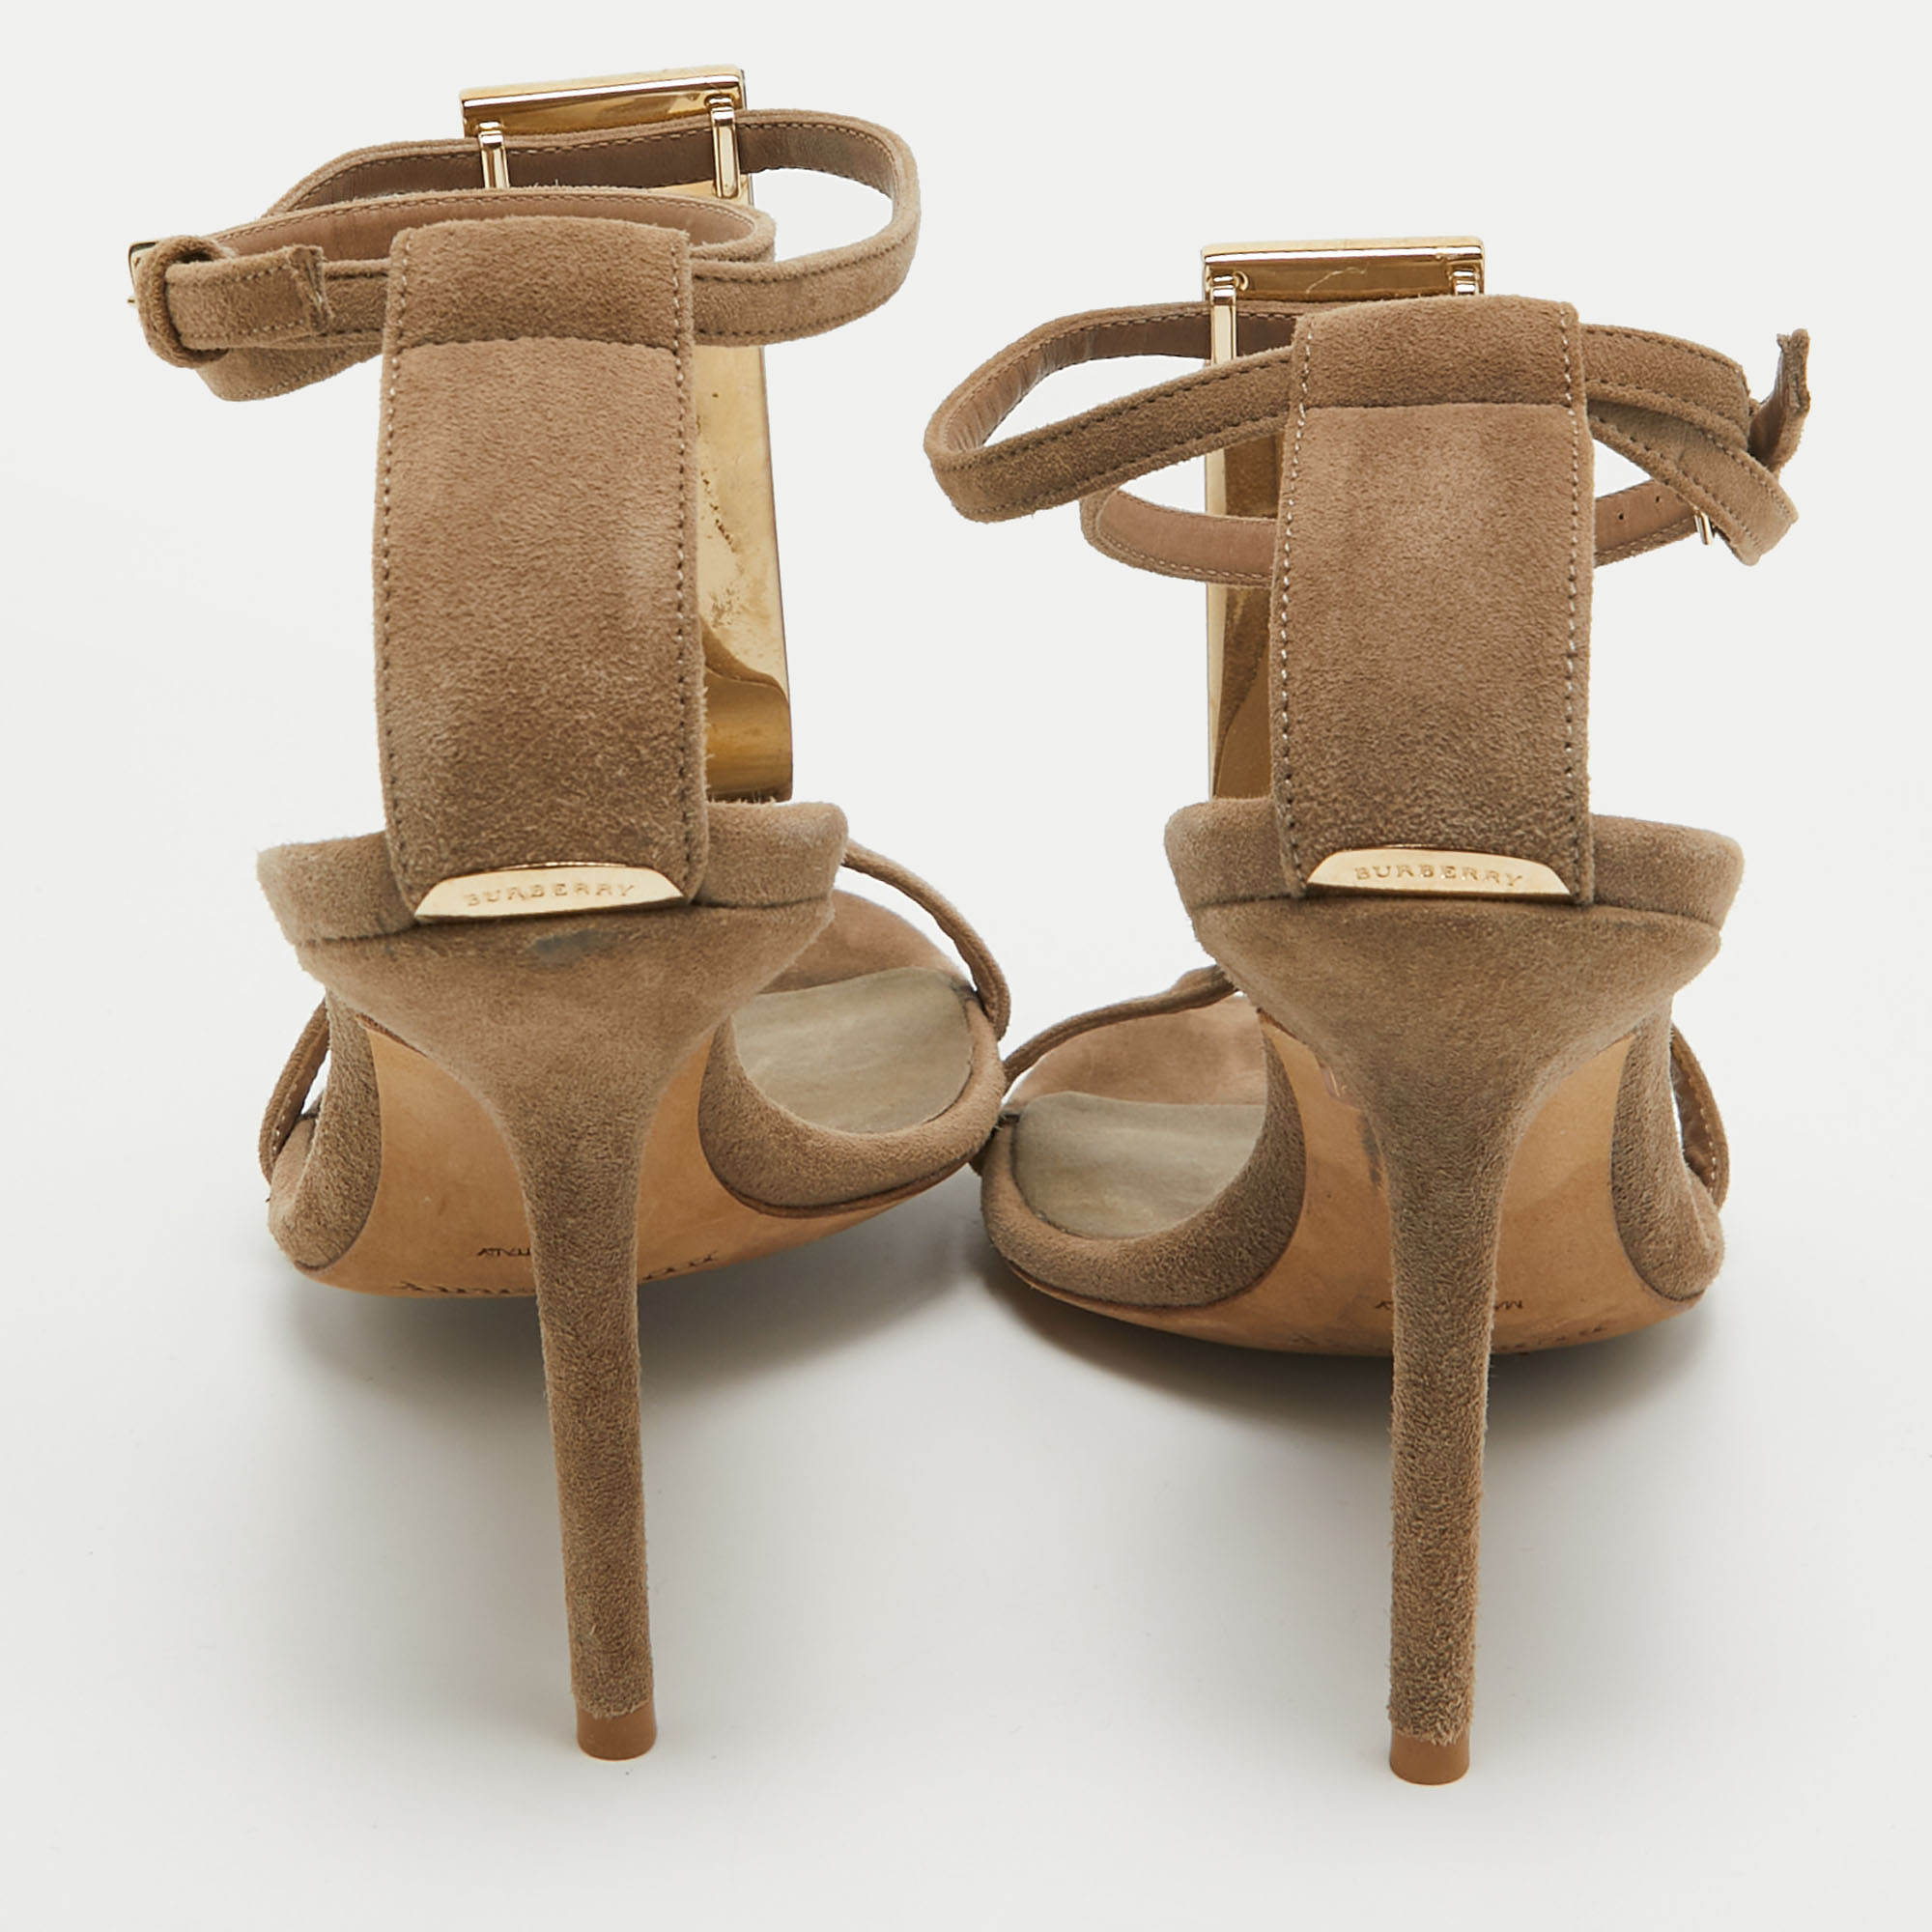 Burberry Beige Suede Embellished Ankle Strap Sandals Size 37